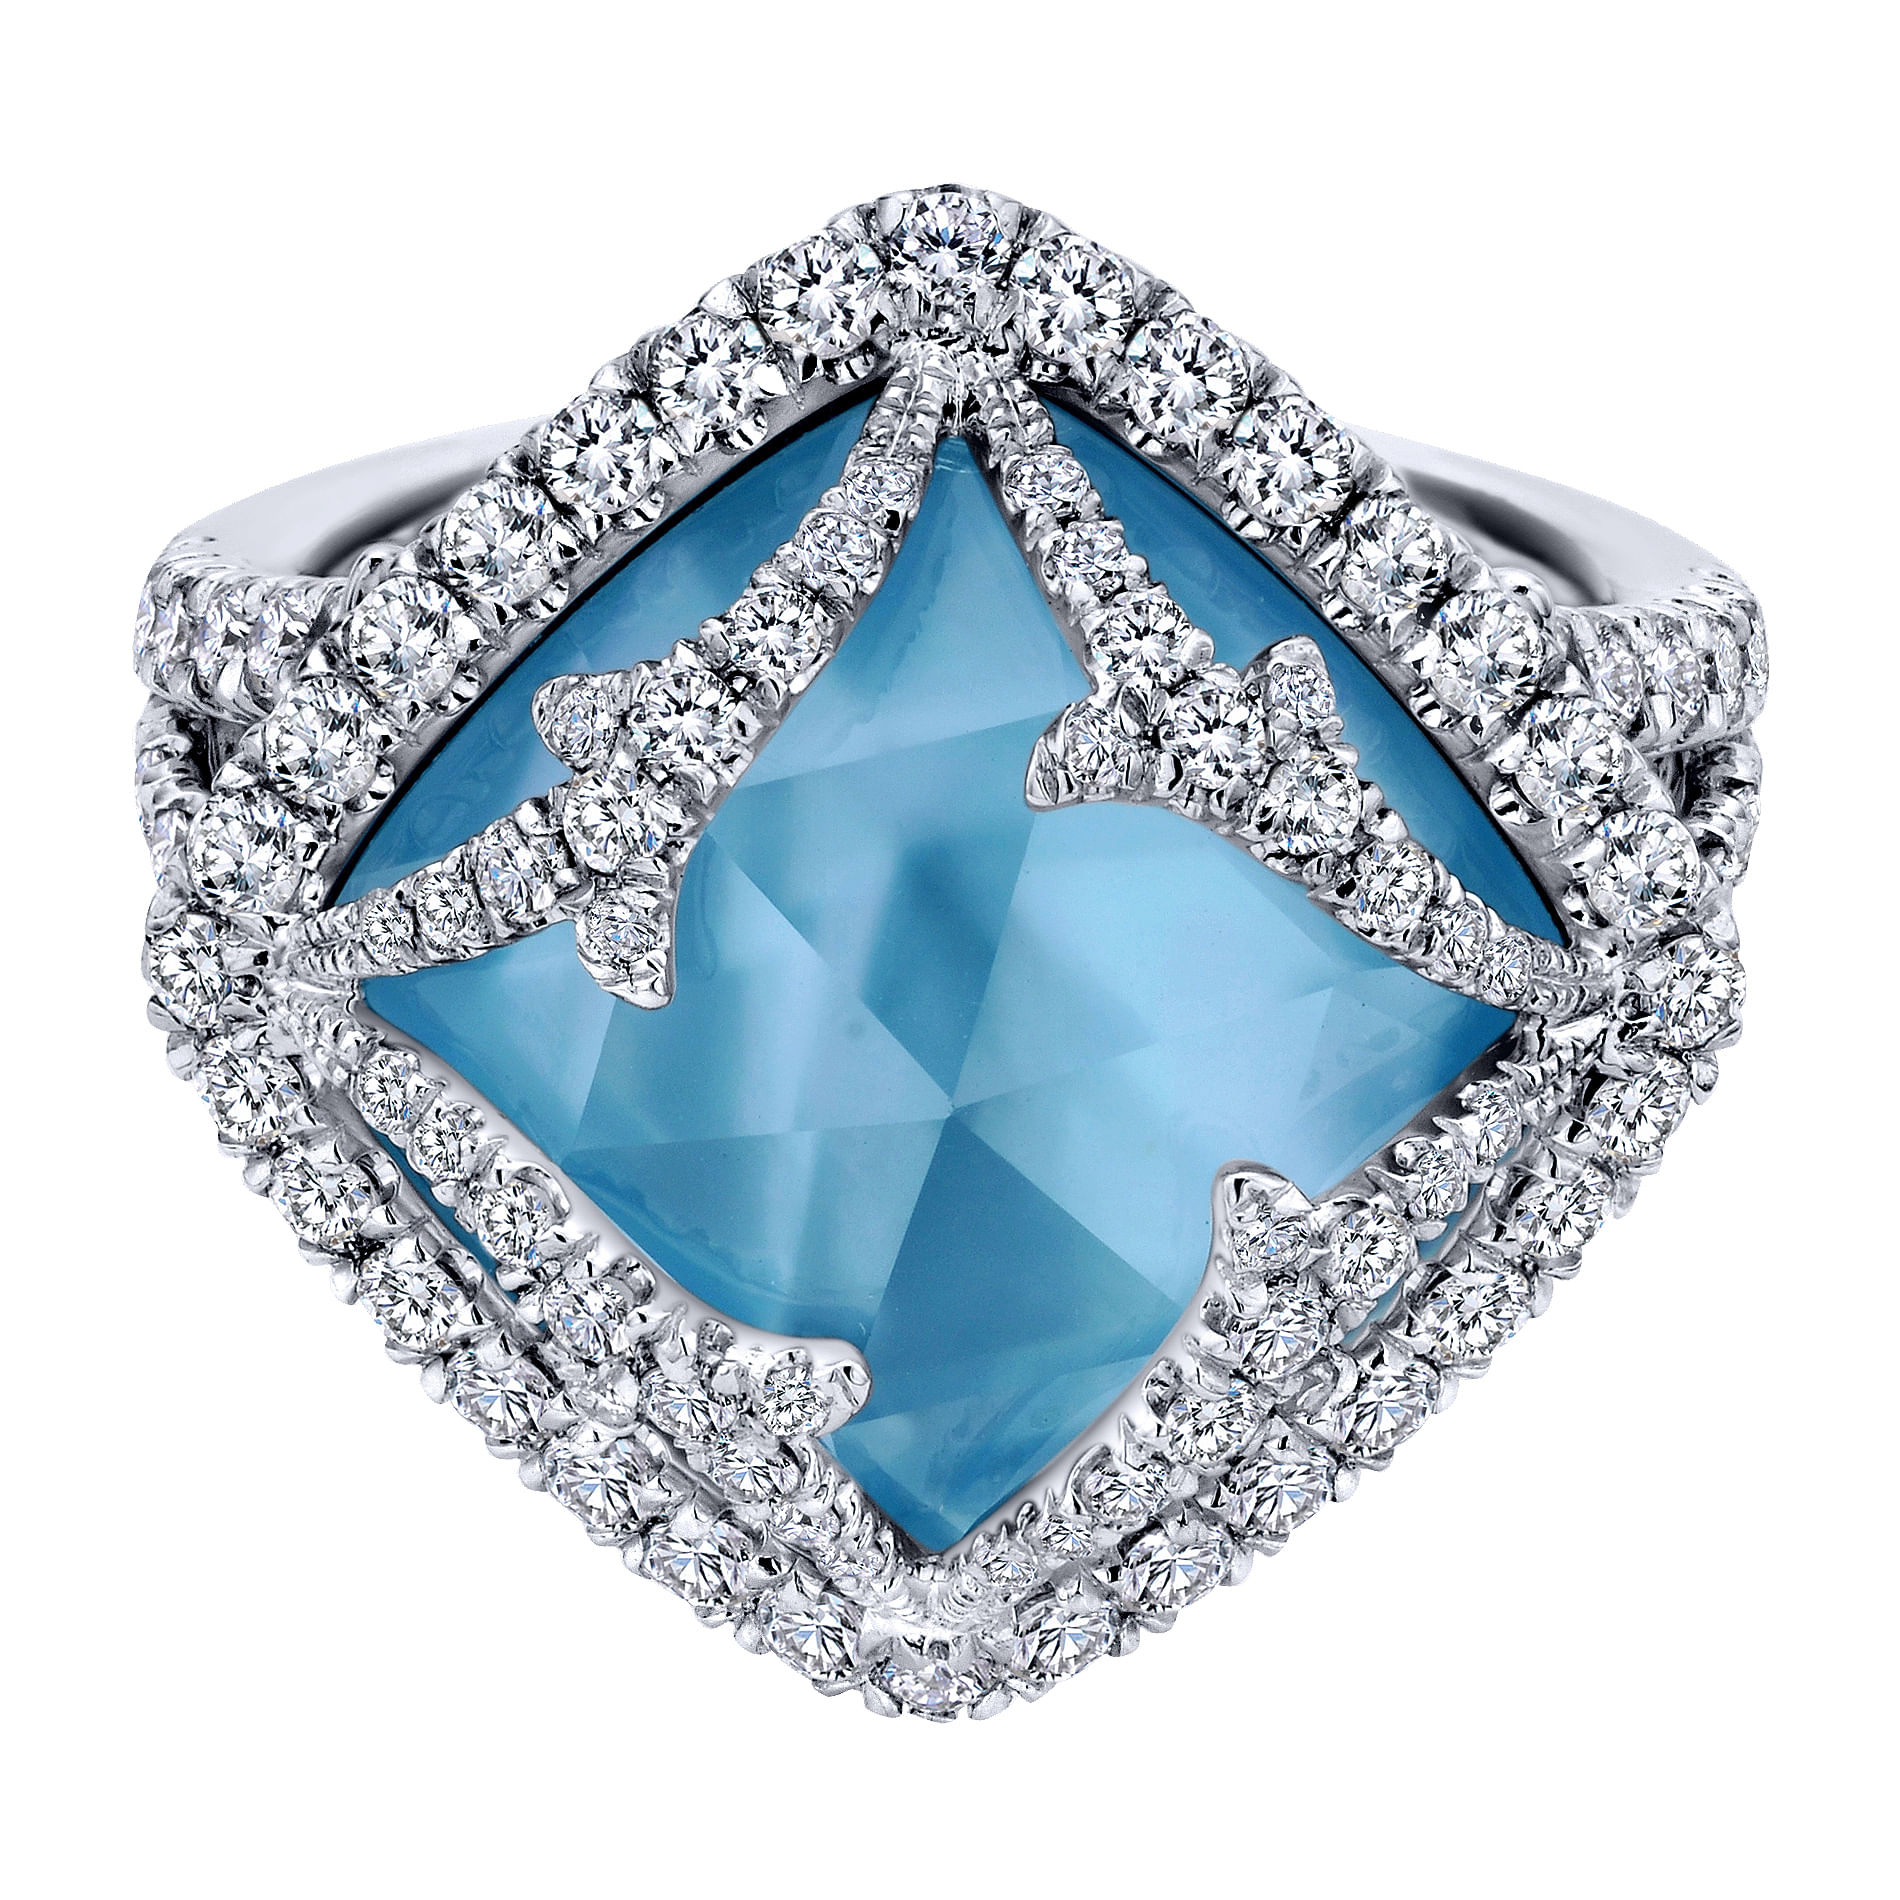 18K White Gold Vintage Inspired Rock Crystal, White MOP & Turquoise Triplet Ring